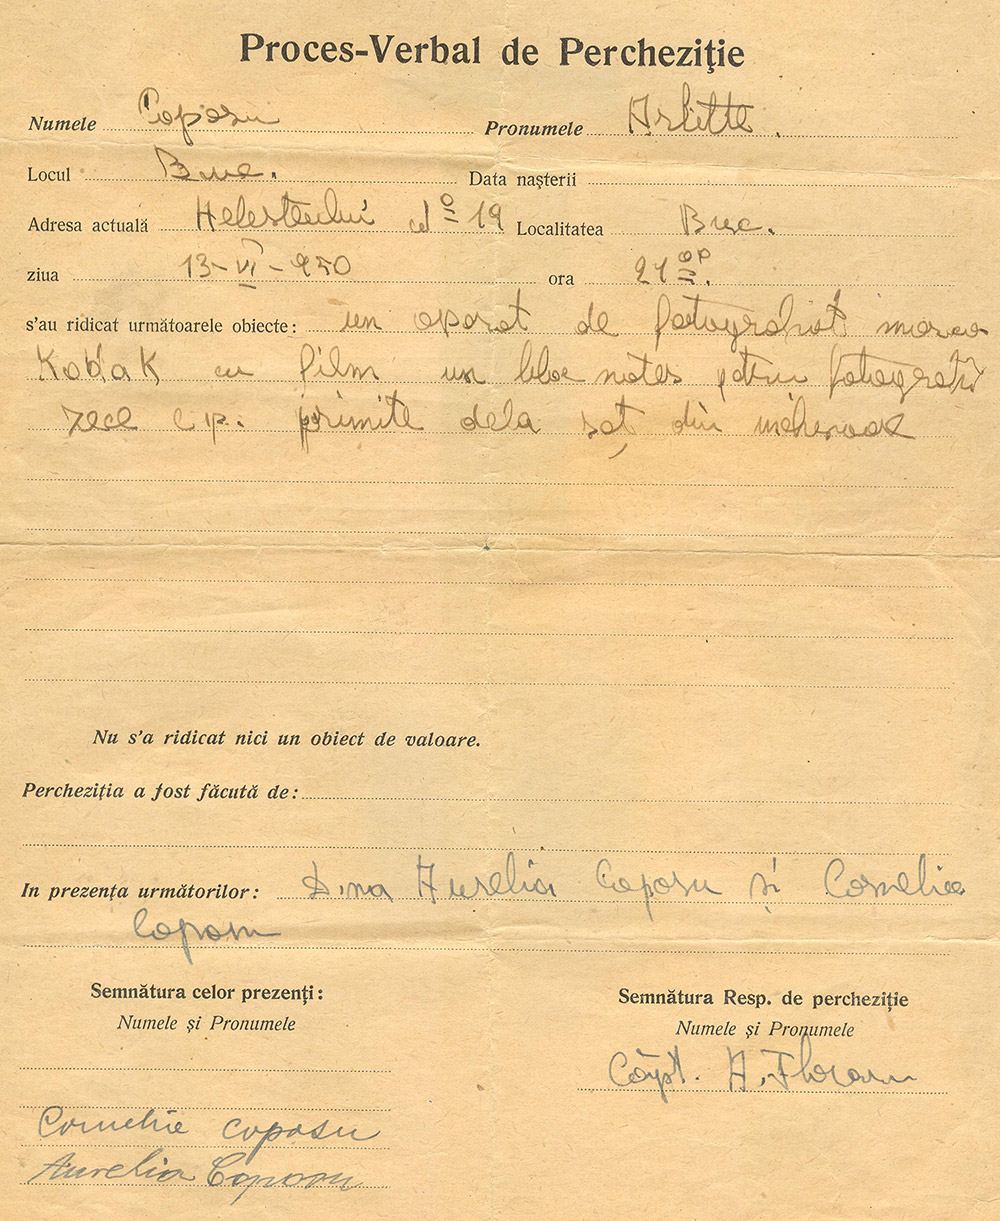 Proces verbal de percheziție - Arlette Coposu - 13-VI-1950